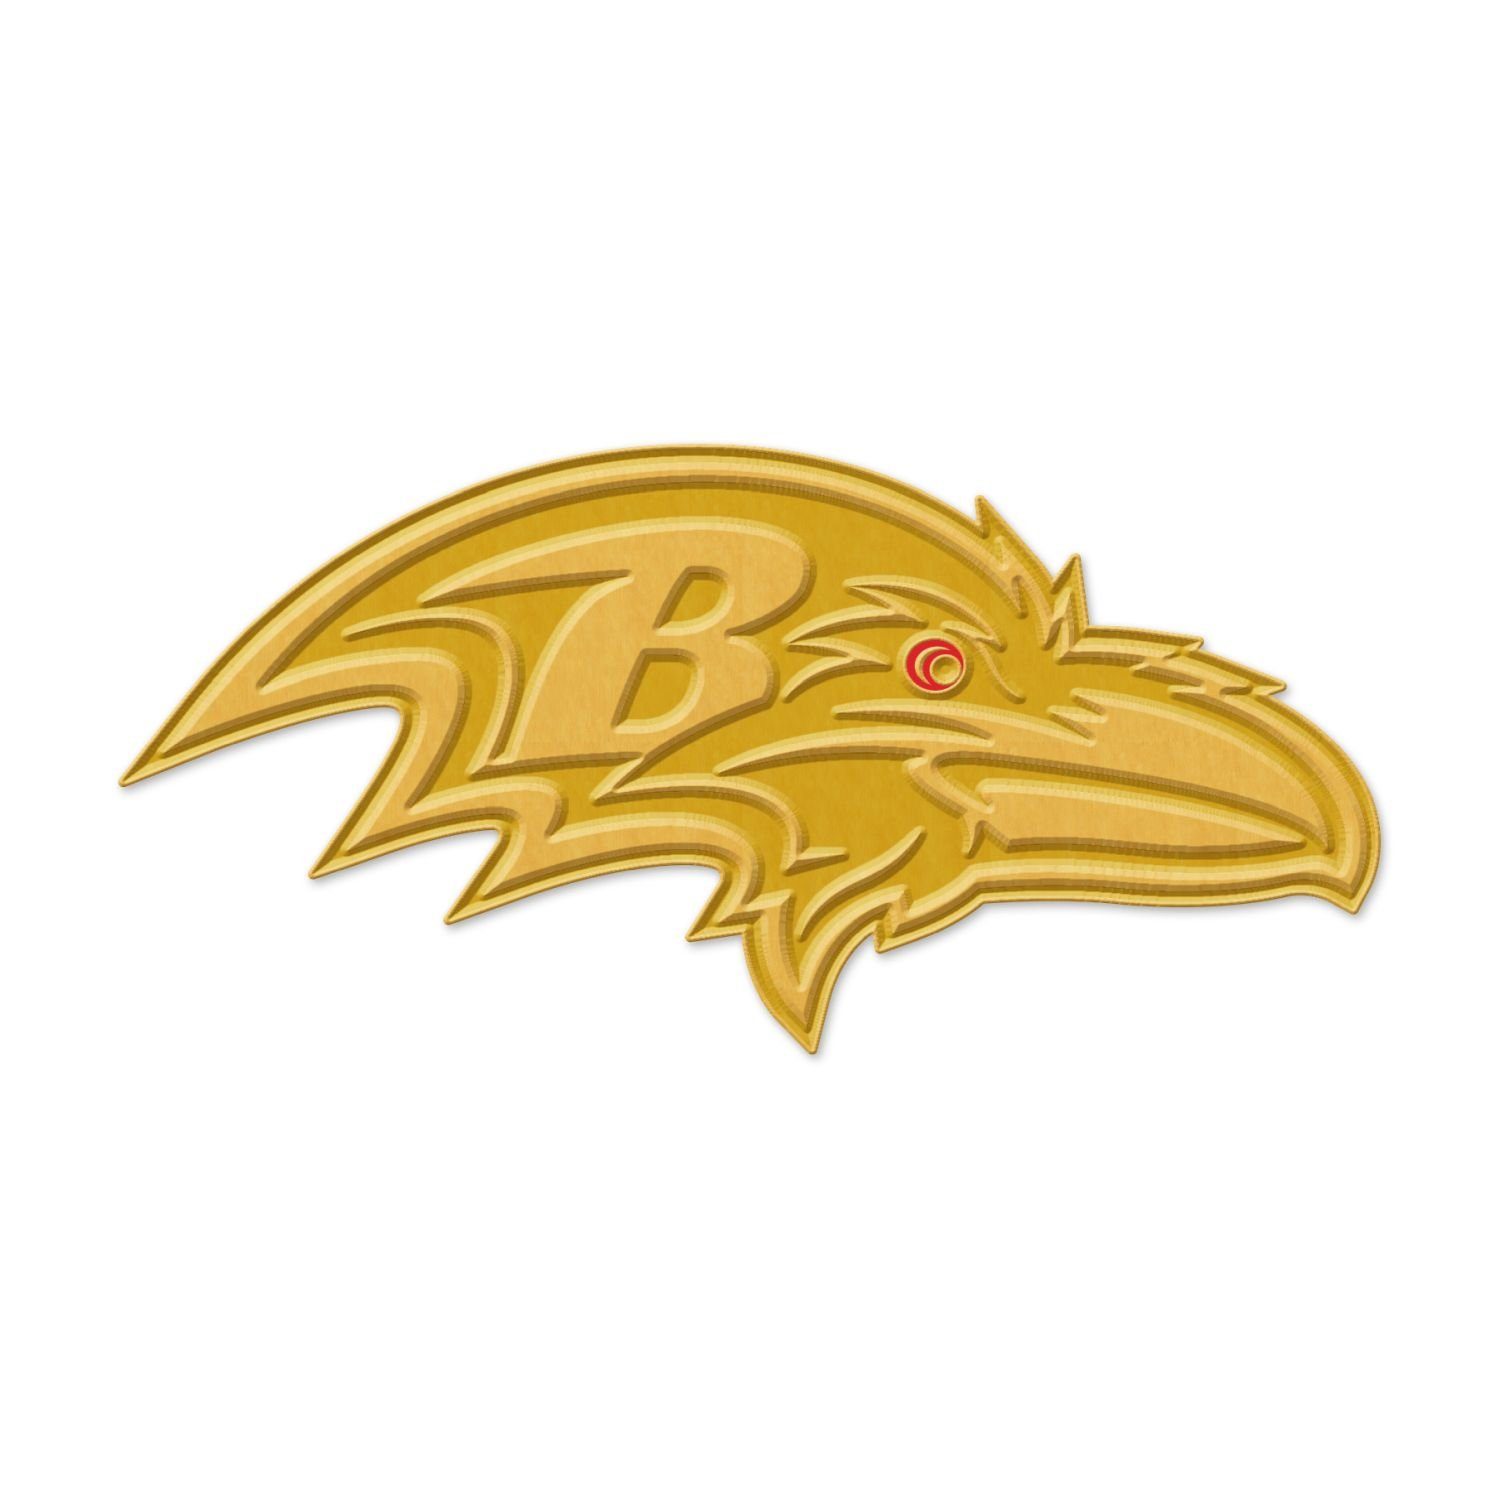 WinCraft Pins Universal Schmuck Caps Baltimore GOLD Teams NFL PIN Ravens